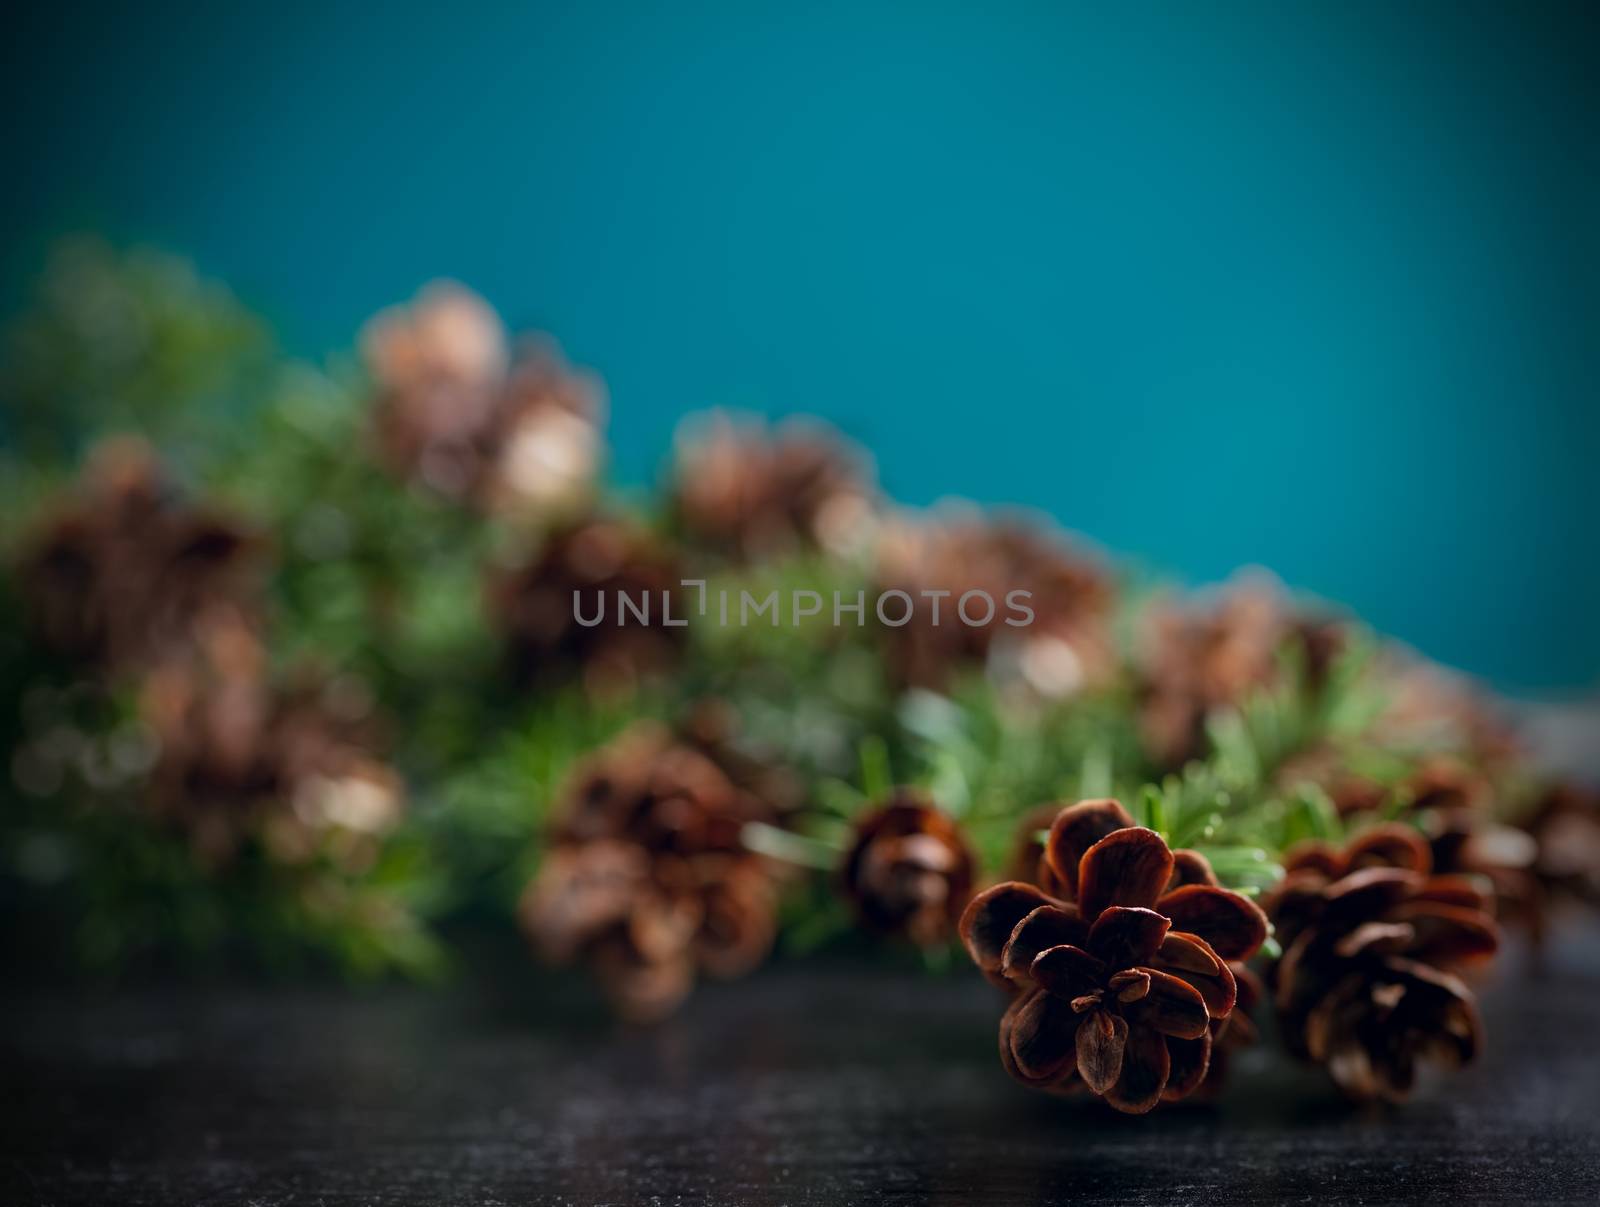 Pine bough with pine cones on black wood background by jarenwicklund